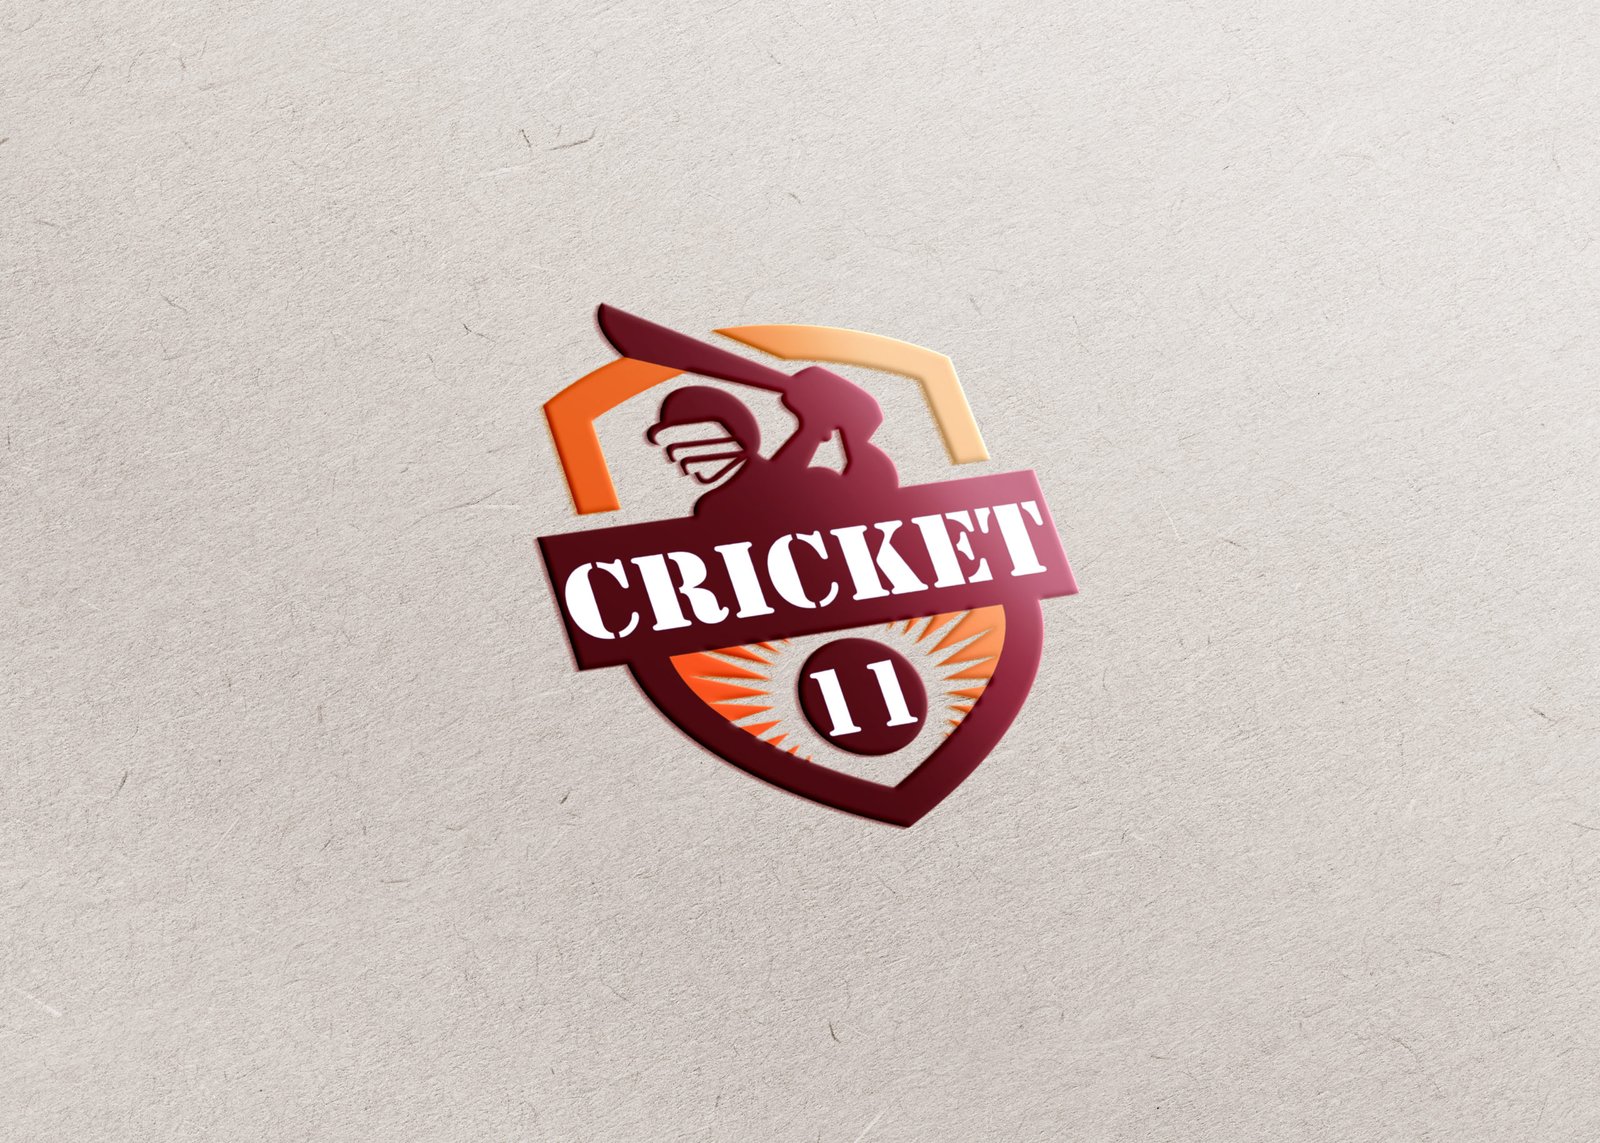 online cricket game app logo design by Badri Design